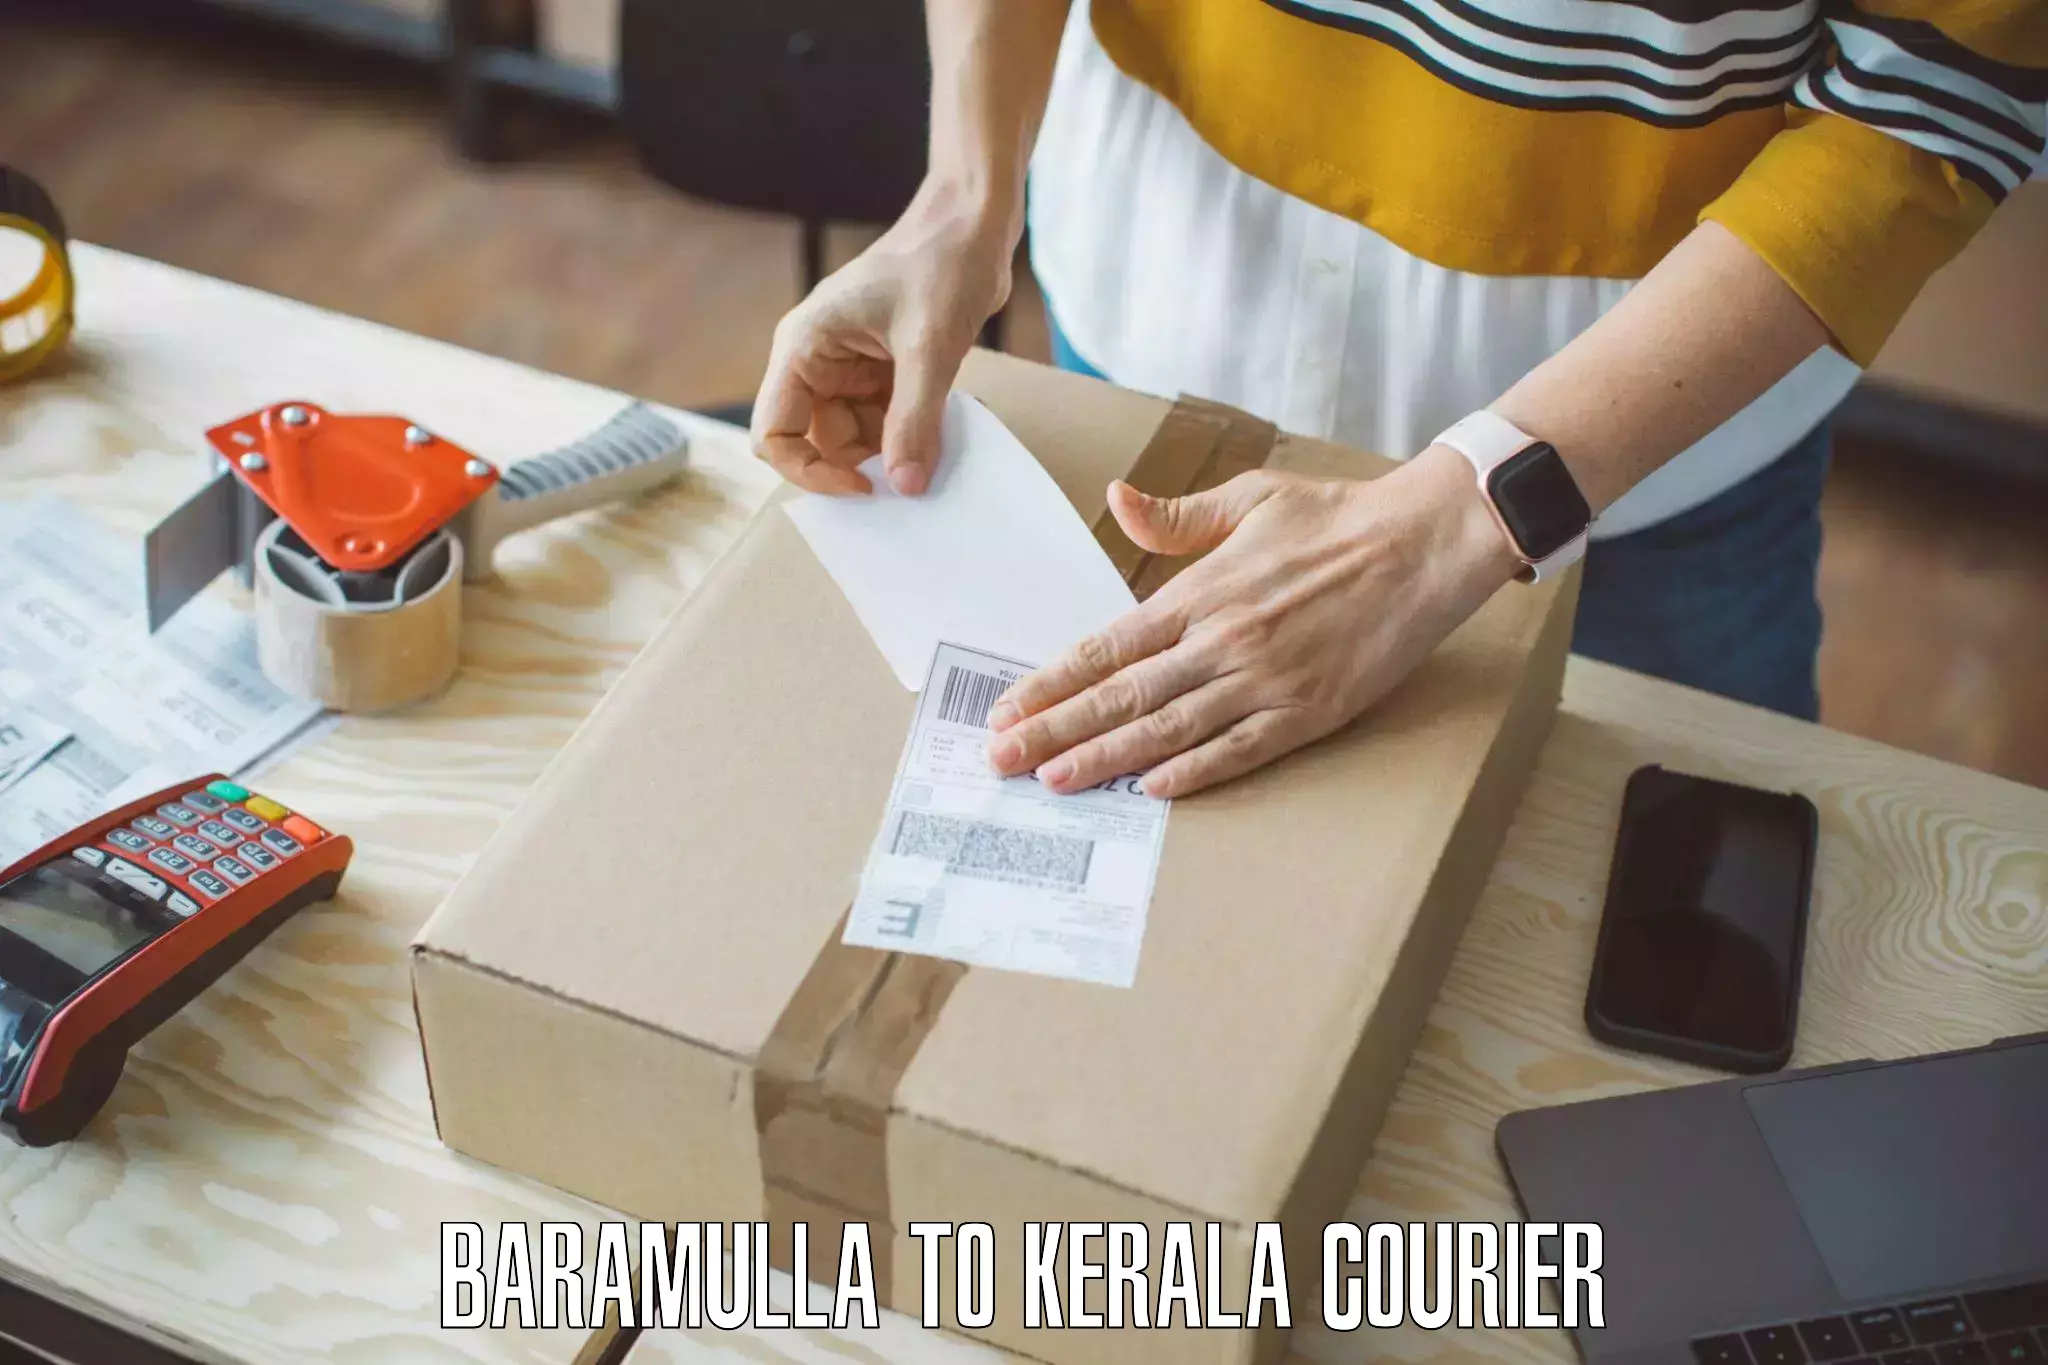 Furniture delivery service Baramulla to Kattappana